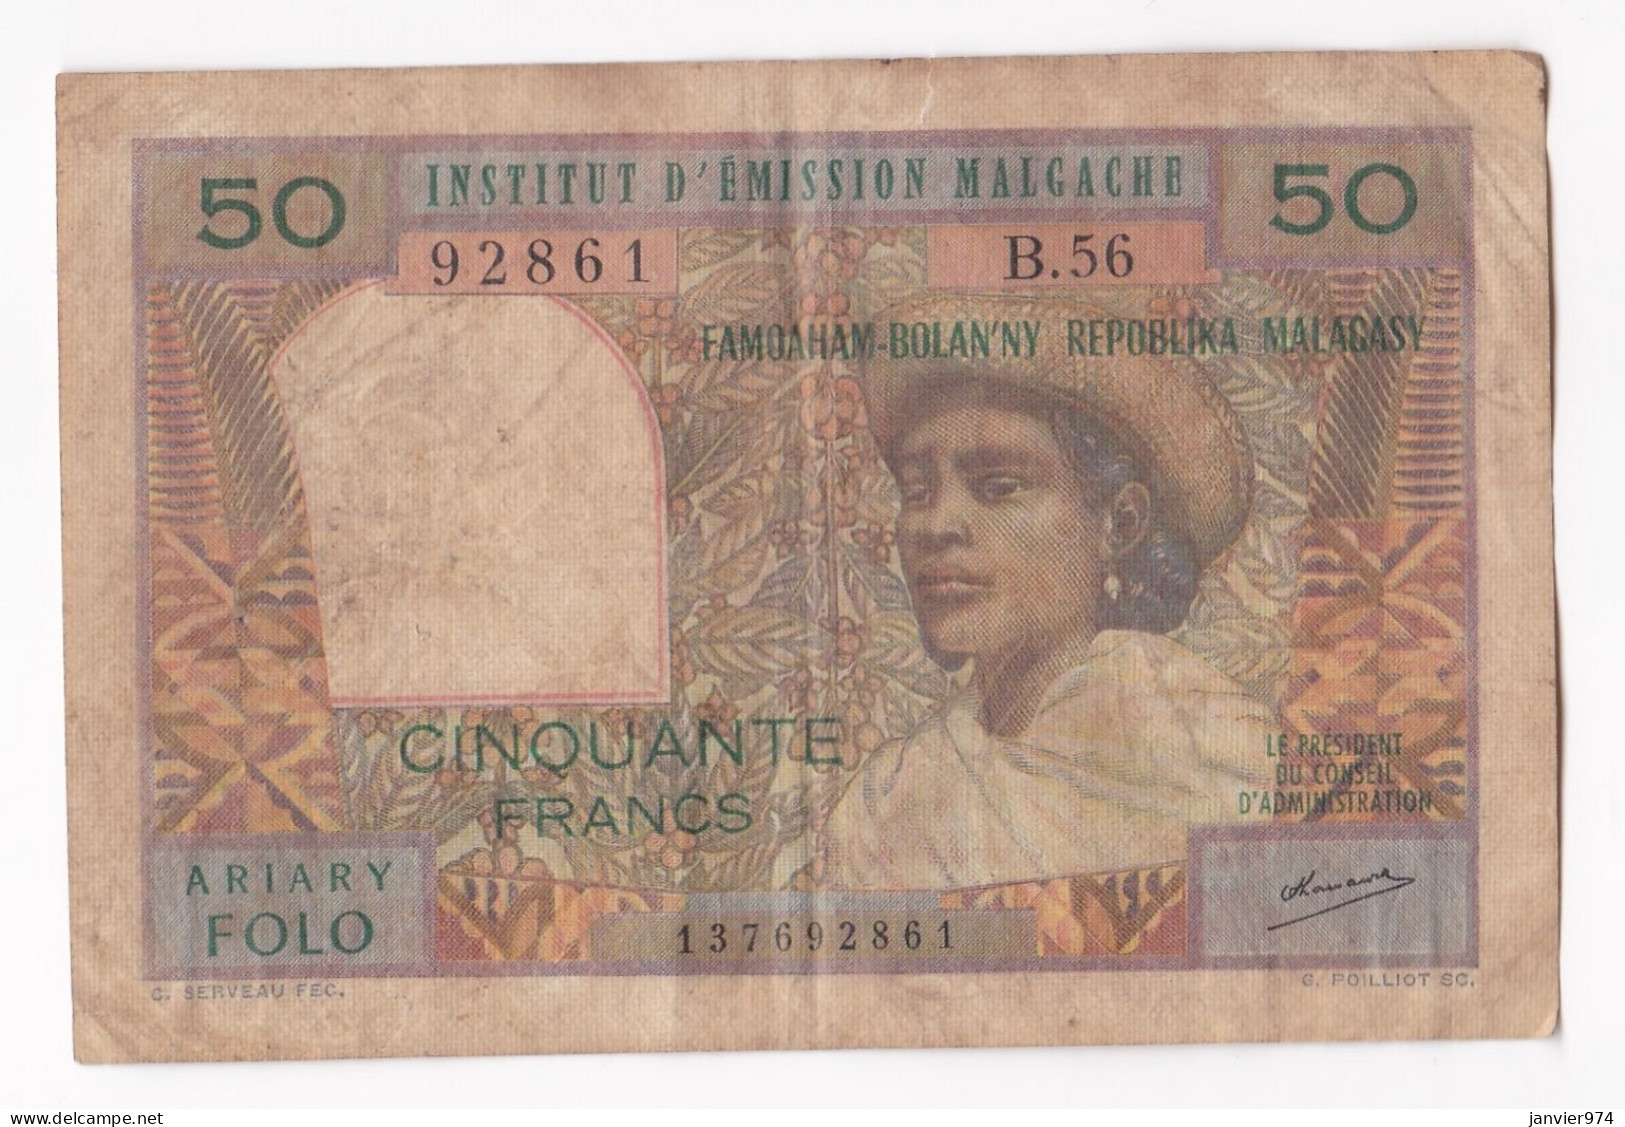 Institut D’Emission Malgache 50 Francs ND ( 1970 - 1973) Alphabet B.56 -n° 92861 - Madagascar